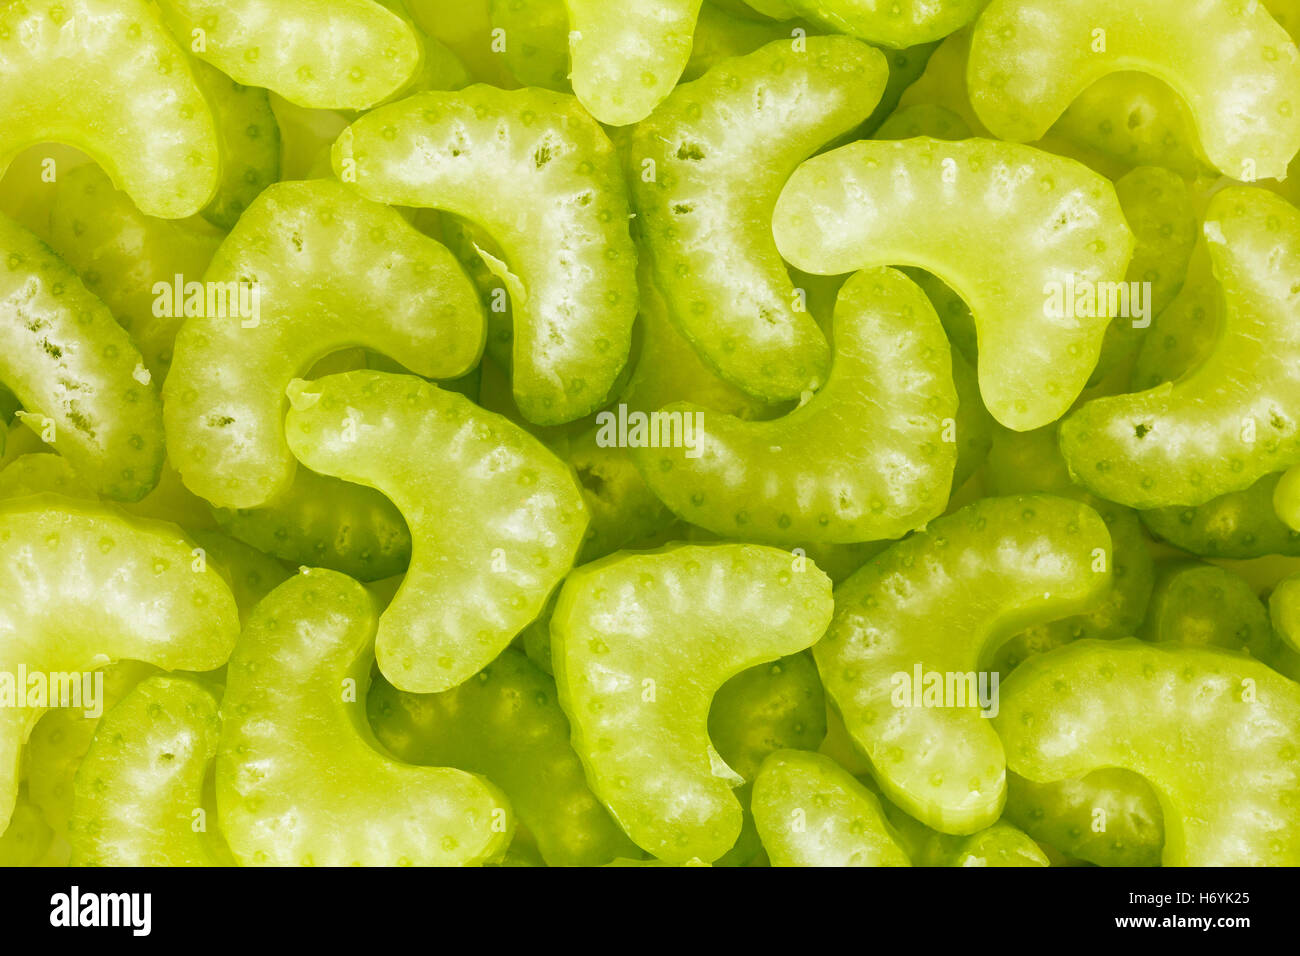 Cut celery close up background Stock Photo